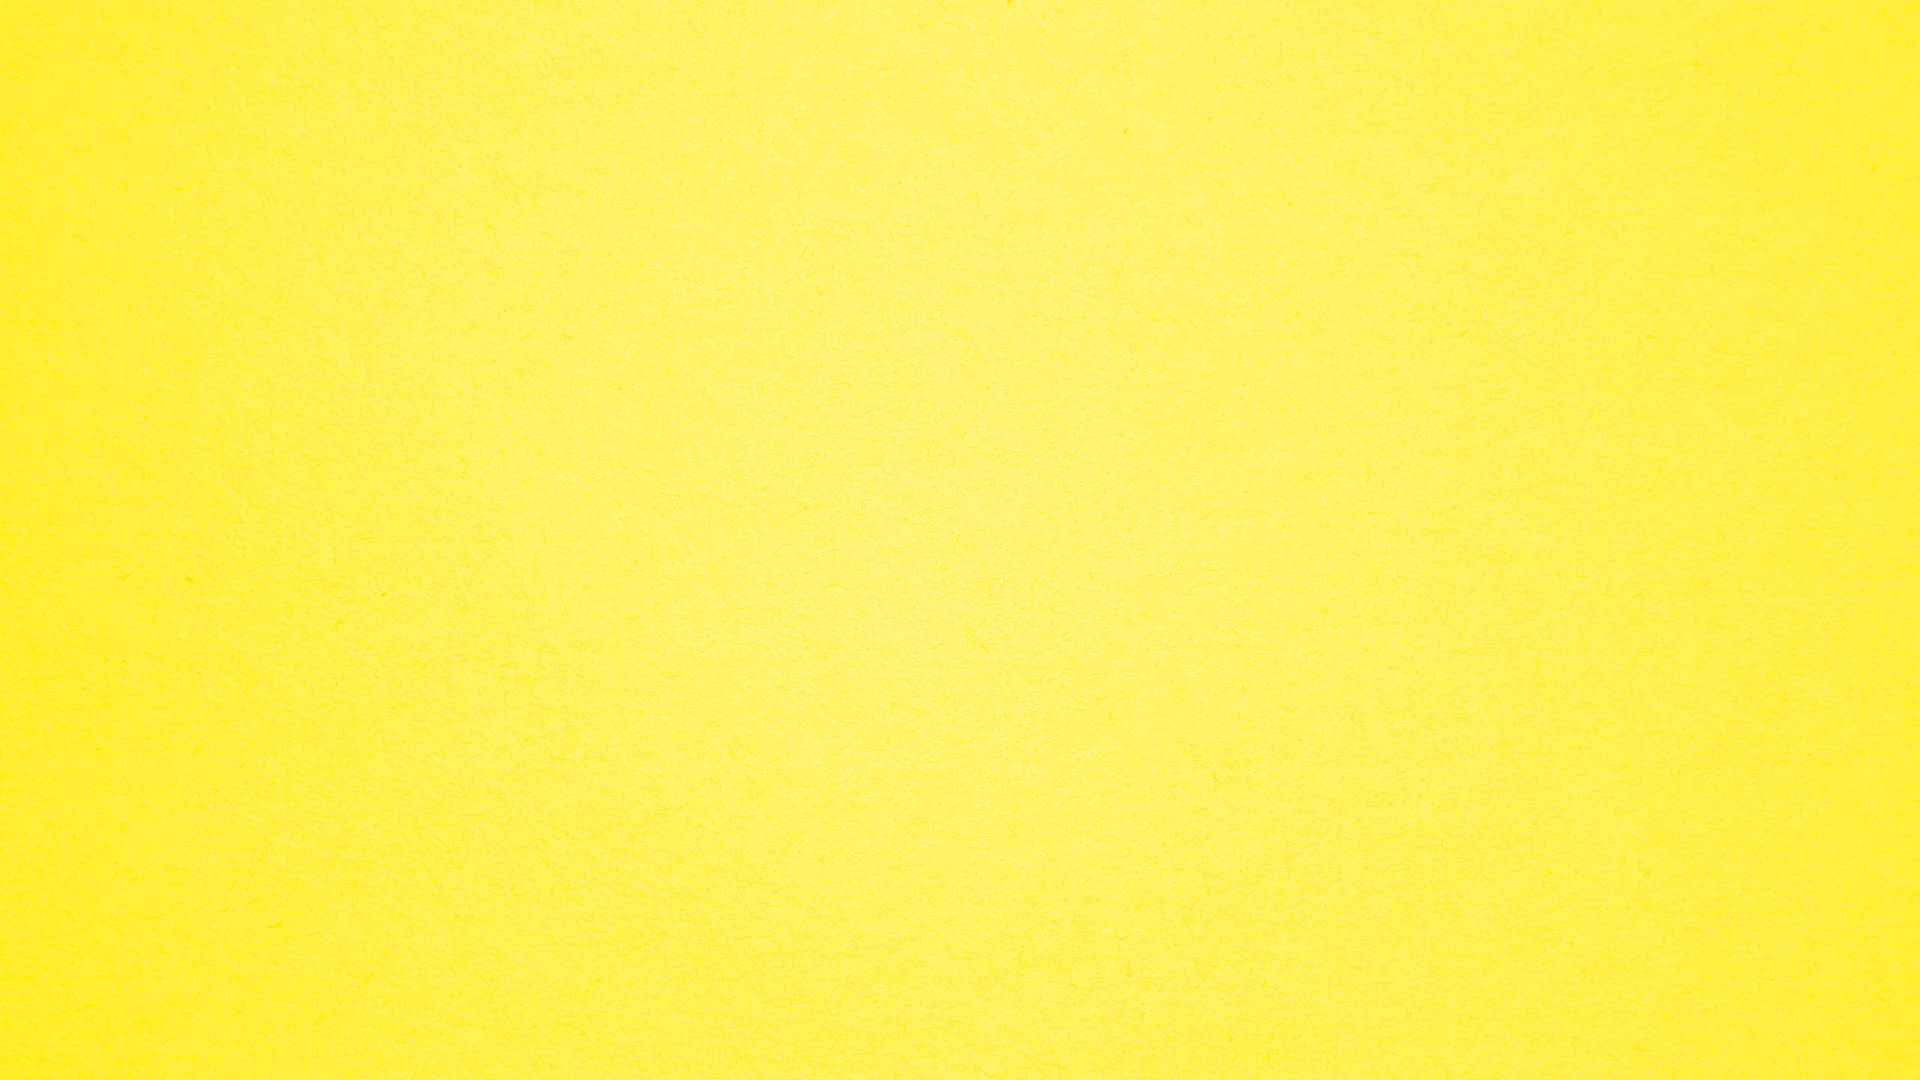 Plain Yellow With Texture Desktop Wallpaper